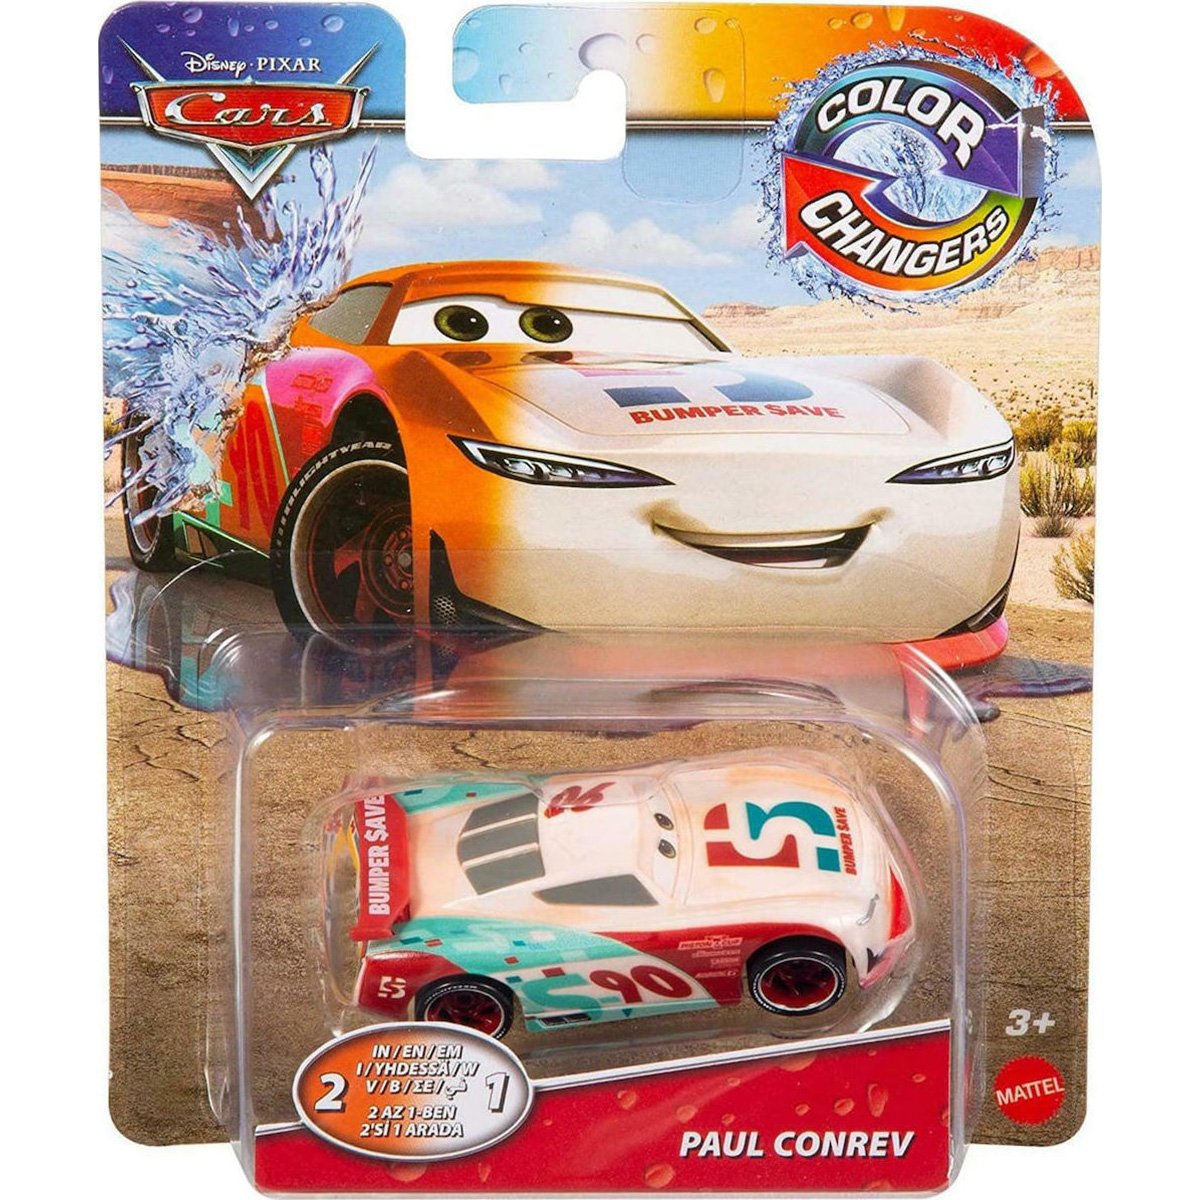 Masinuta Disney Cars, Color Changers, Paul Conrev, 1:55, GPB00